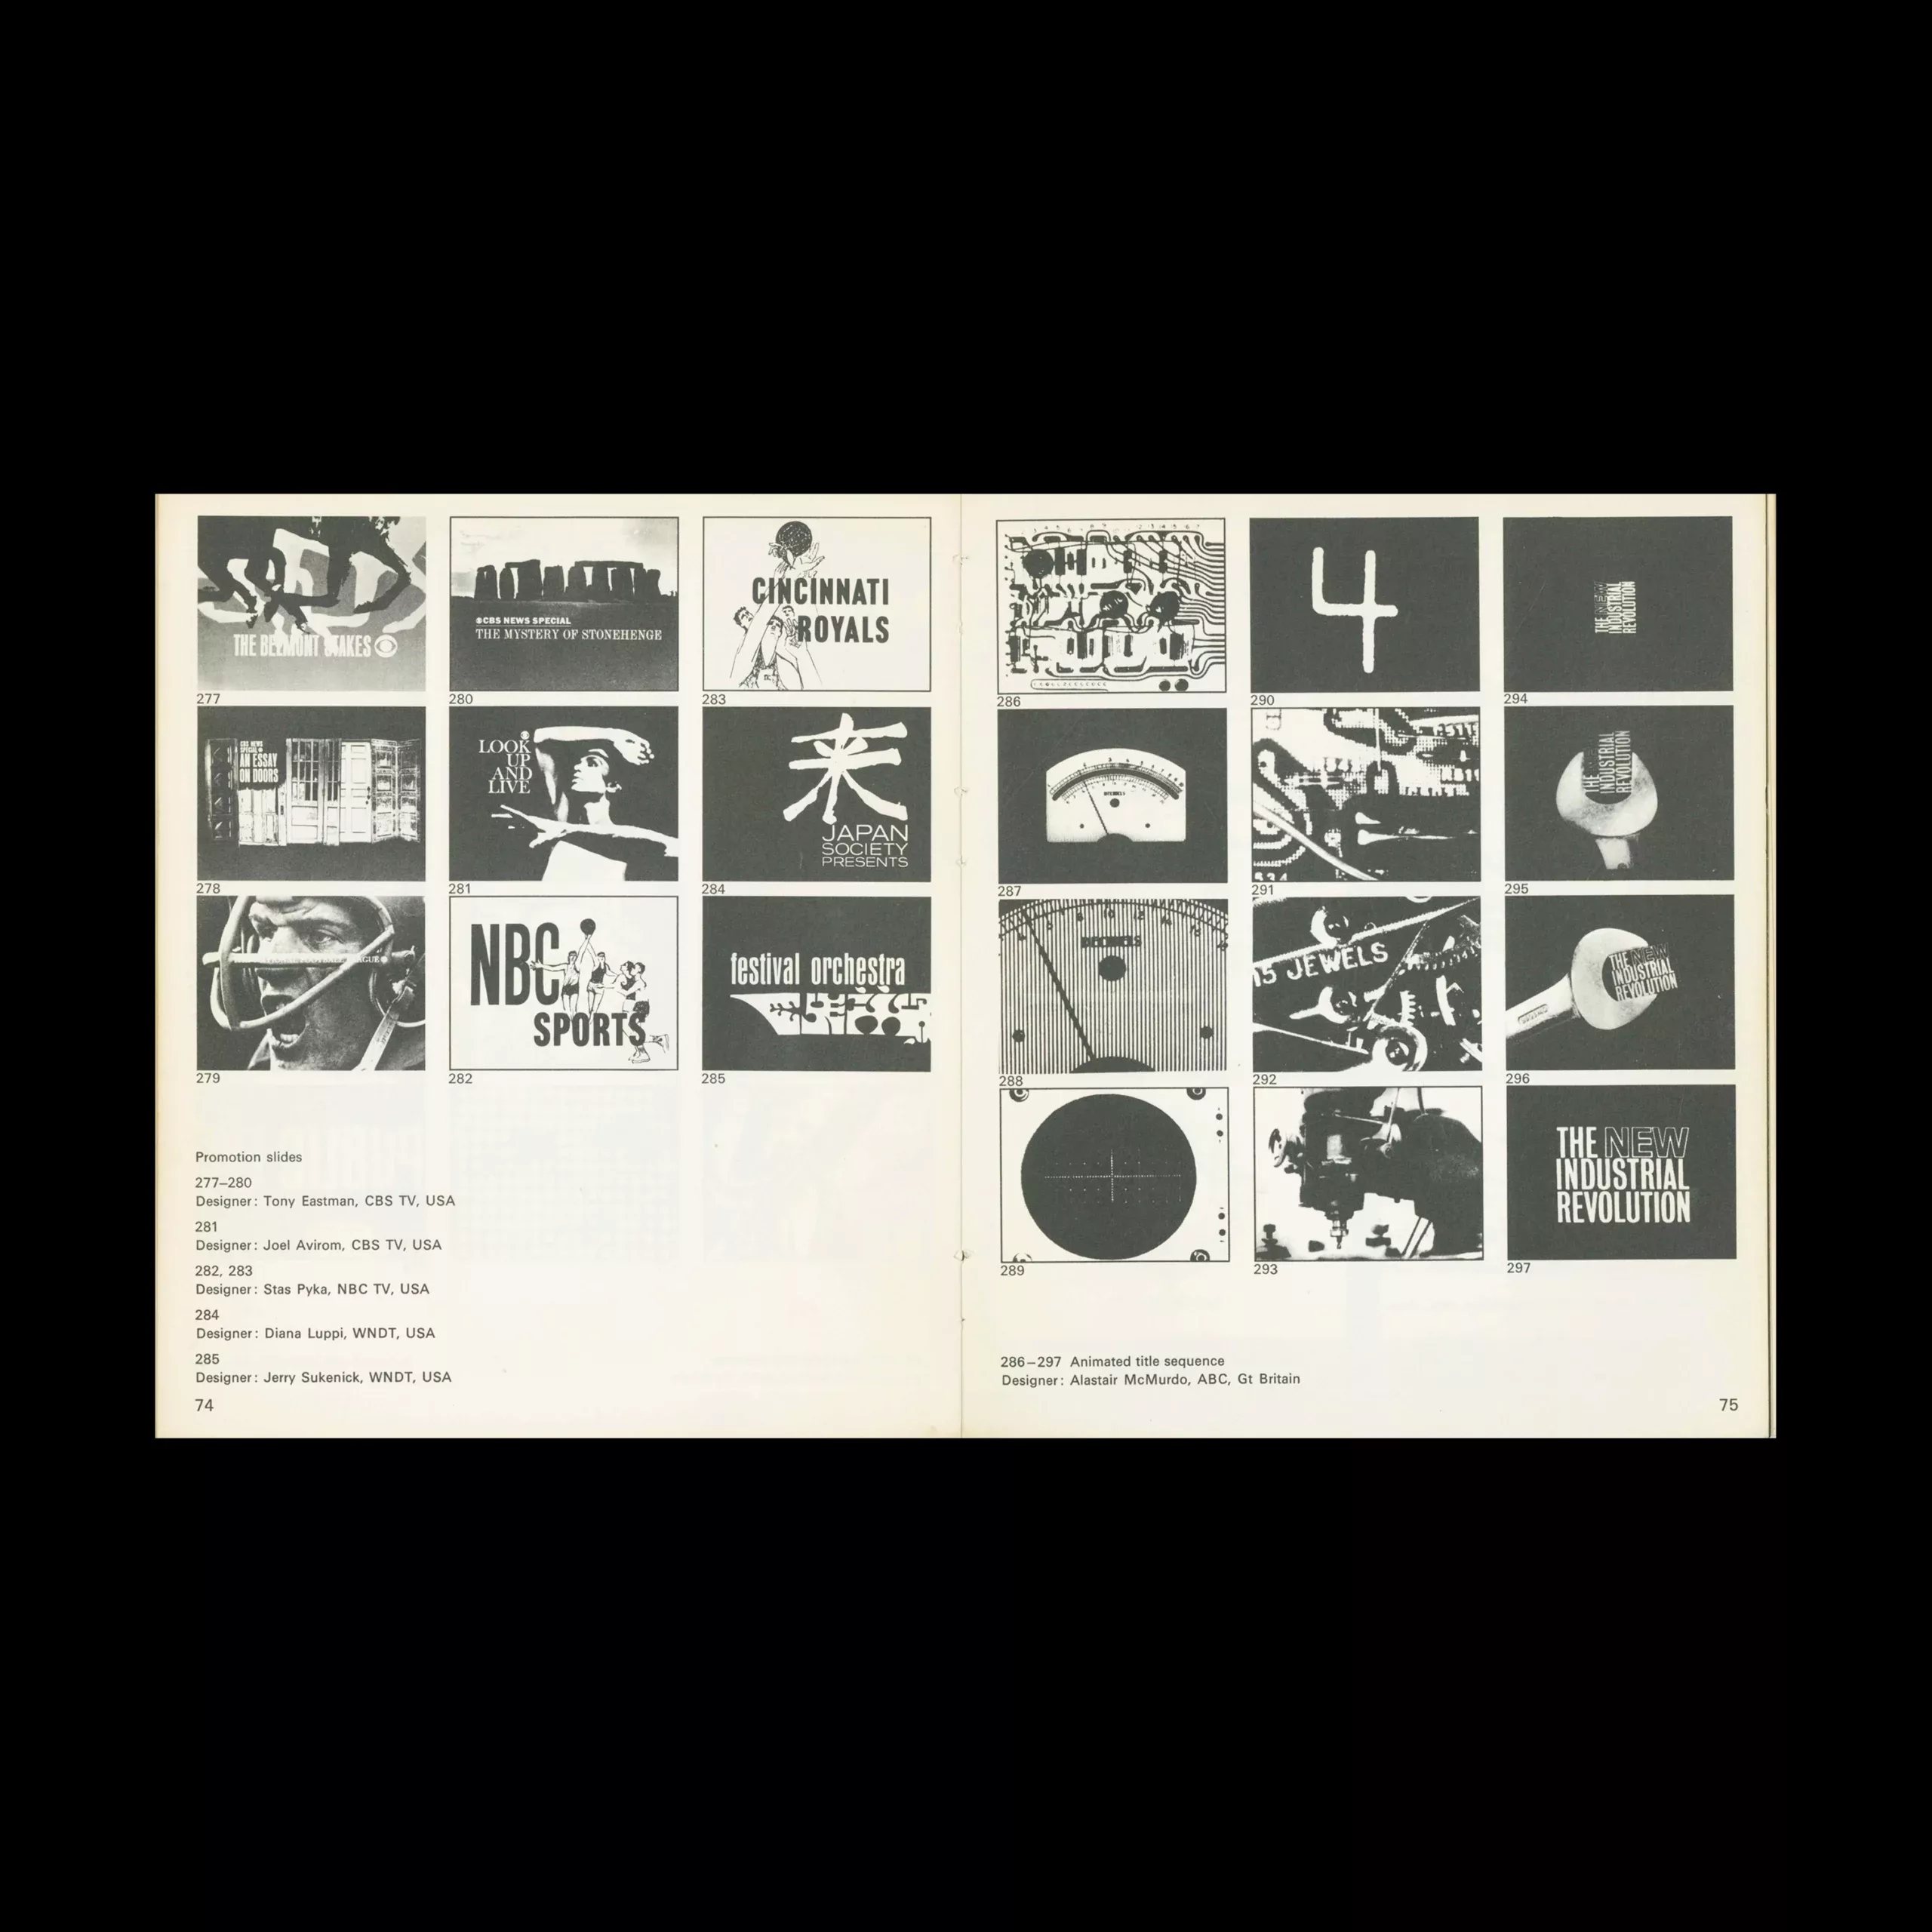 TV / Television Graphics, Studio Vista London, 1966